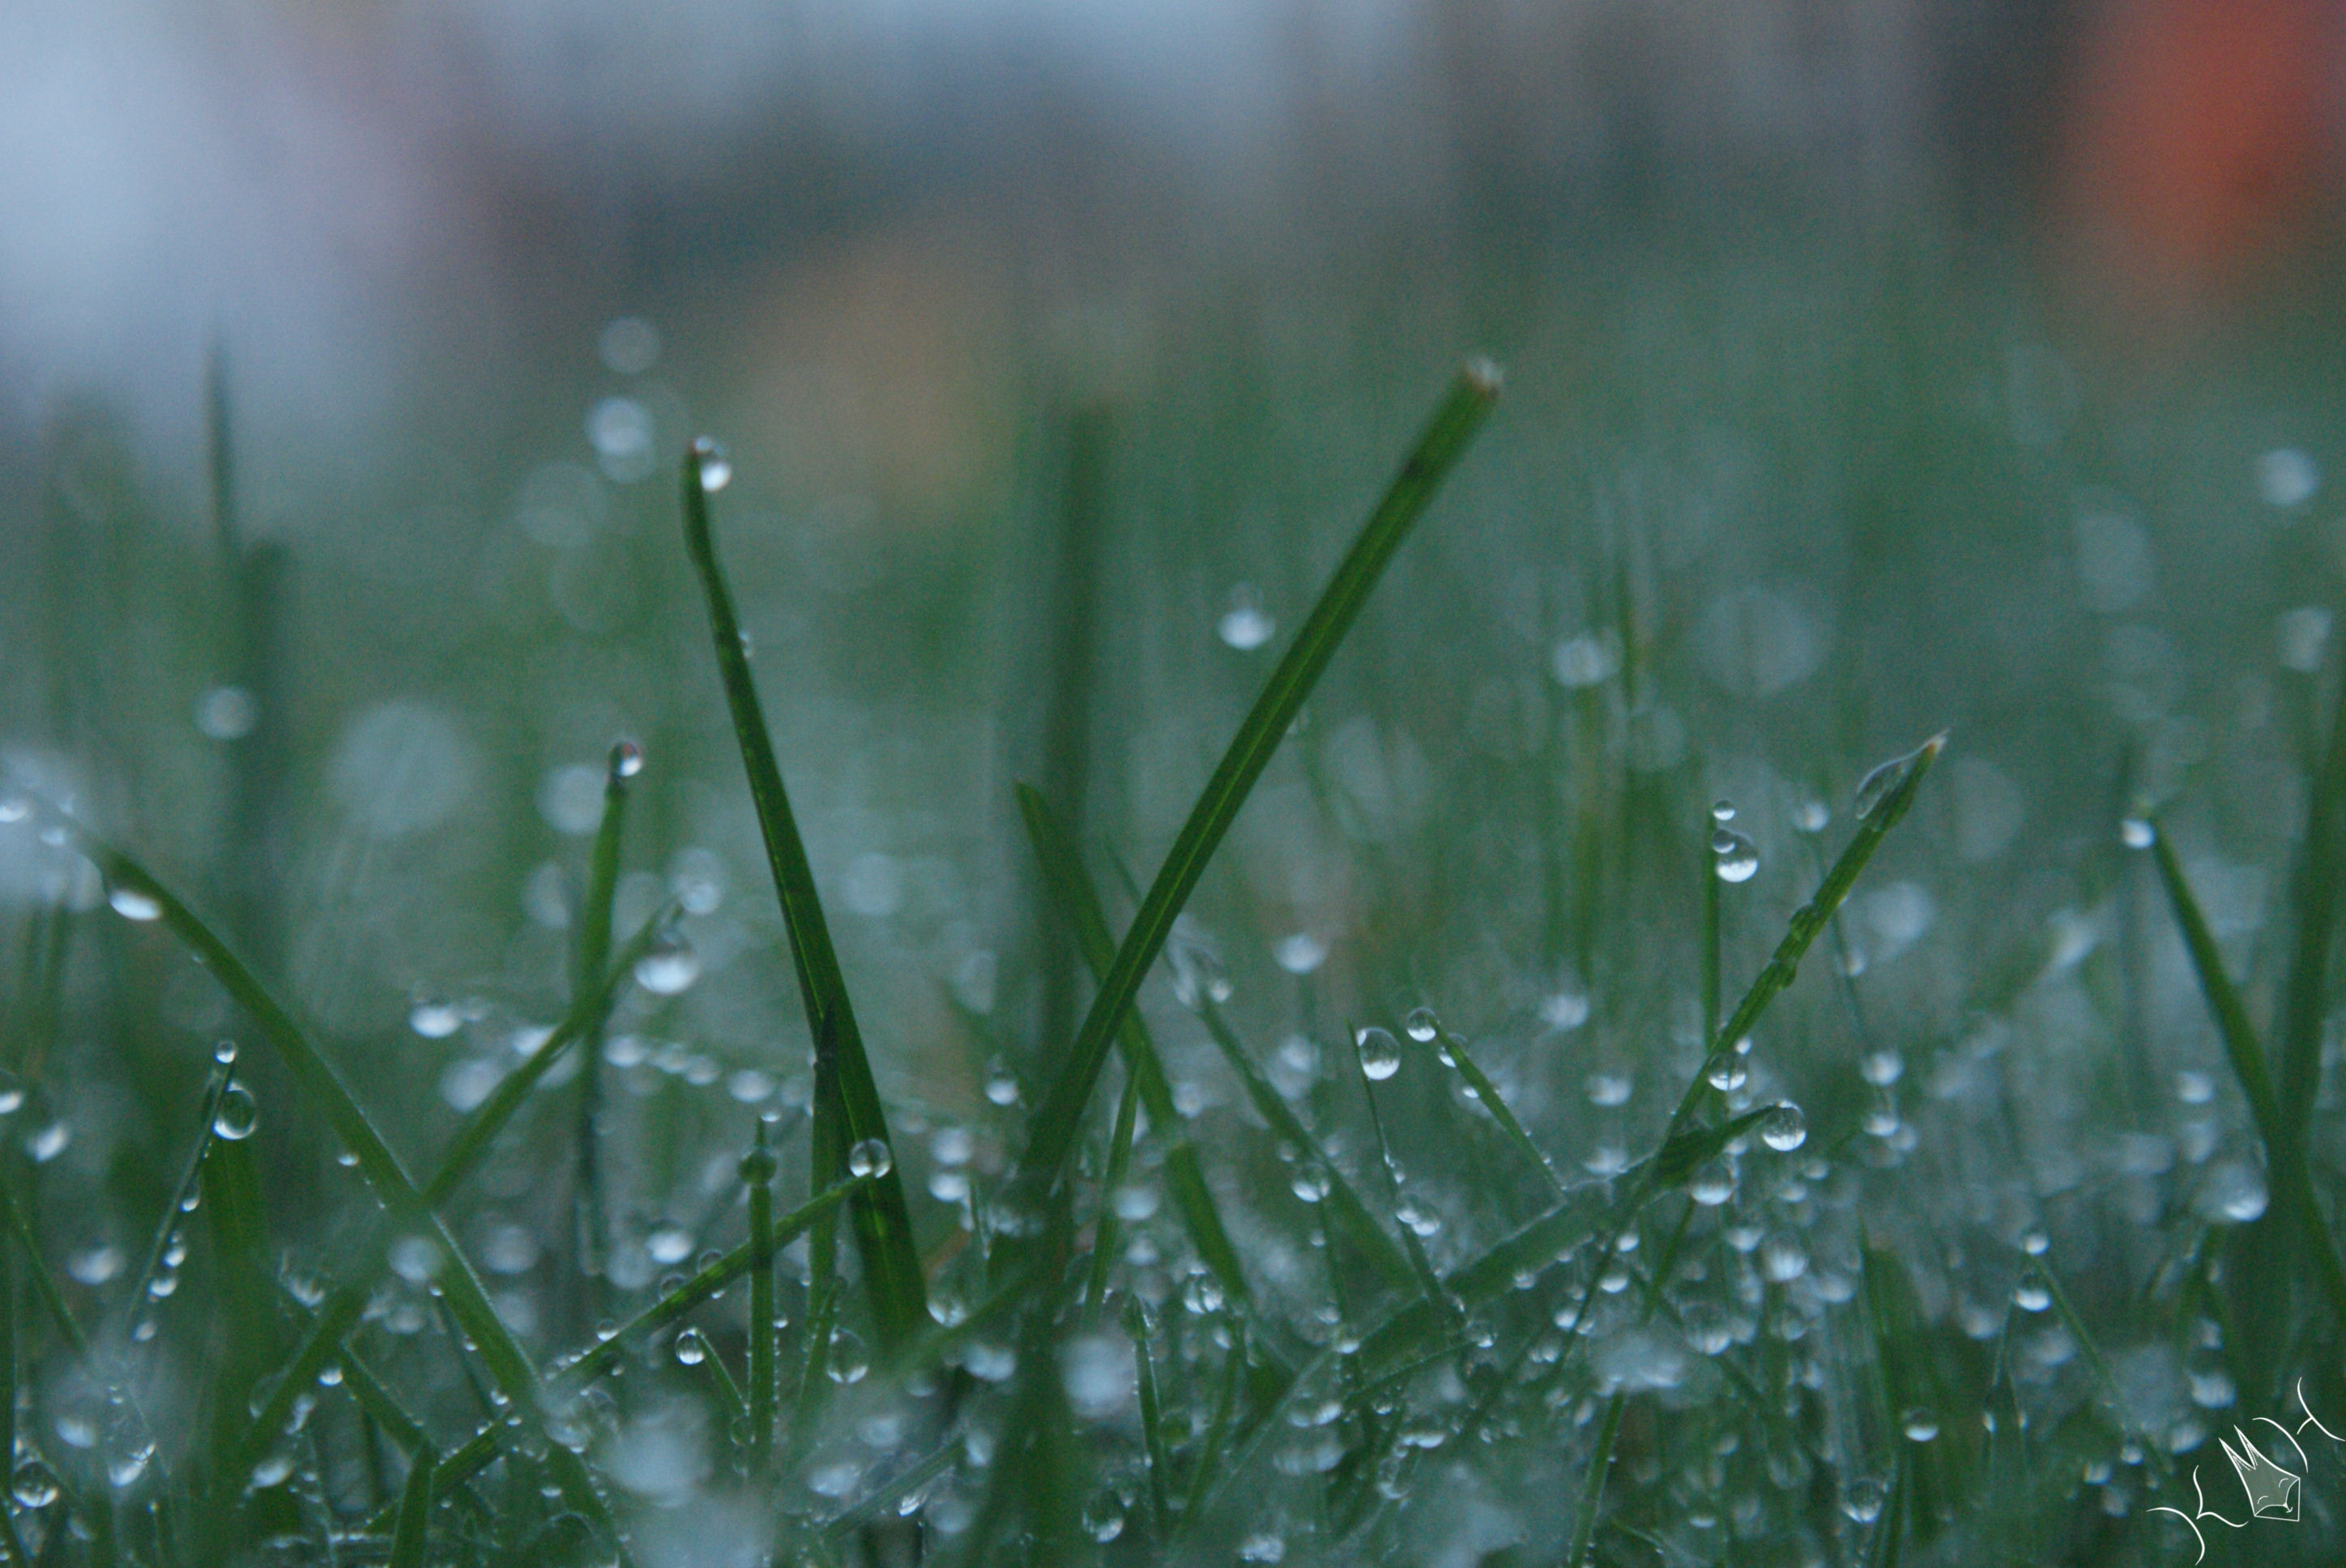 wet grass by KMH-photography on DeviantArt